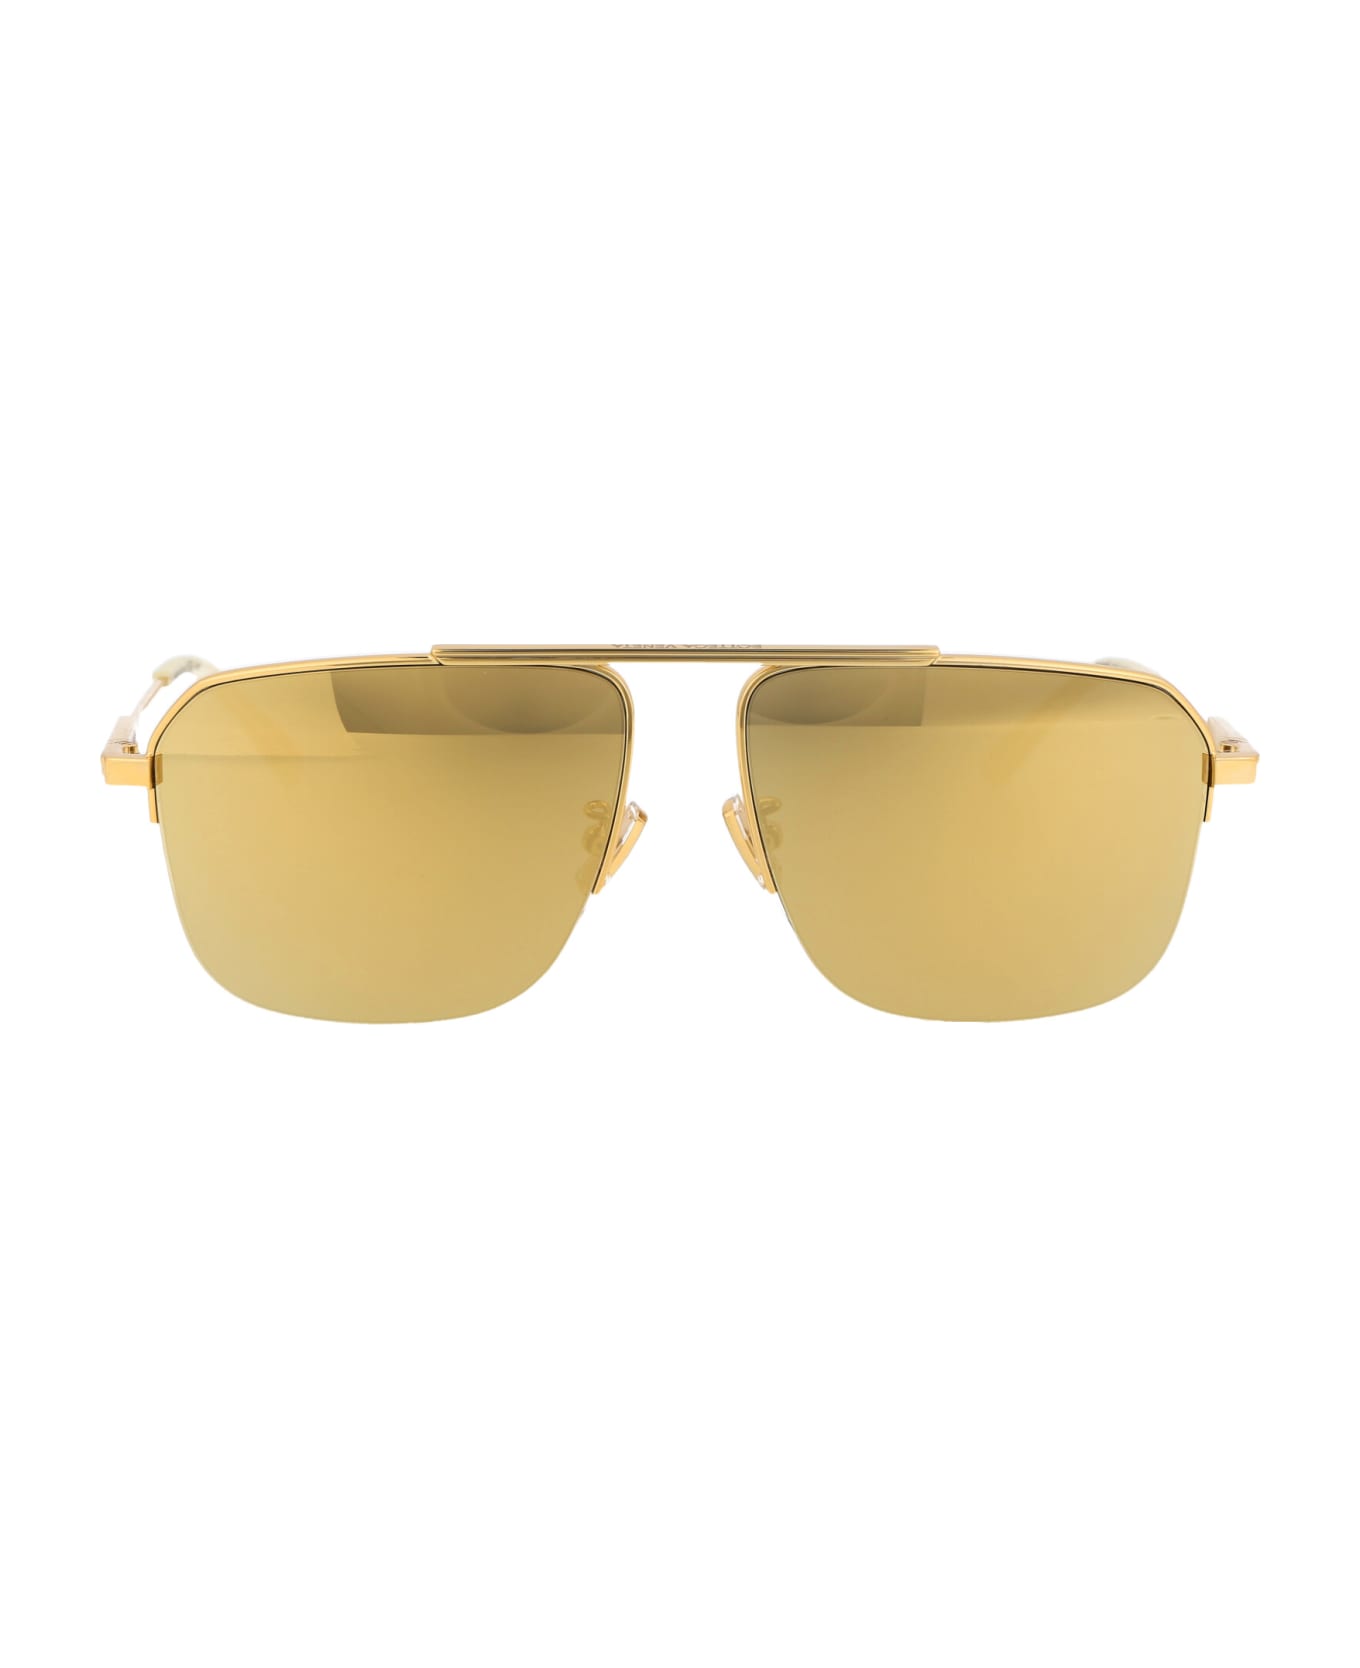 Bottega Veneta Eyewear Bv1149s Sunglasses - 005 GOLD GOLD GOLD